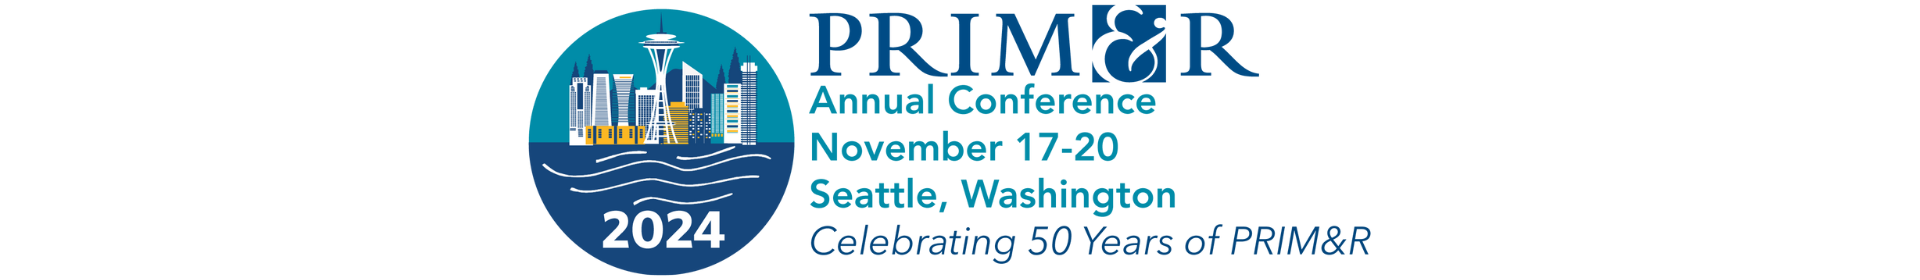 PRIMR24 Event Banner